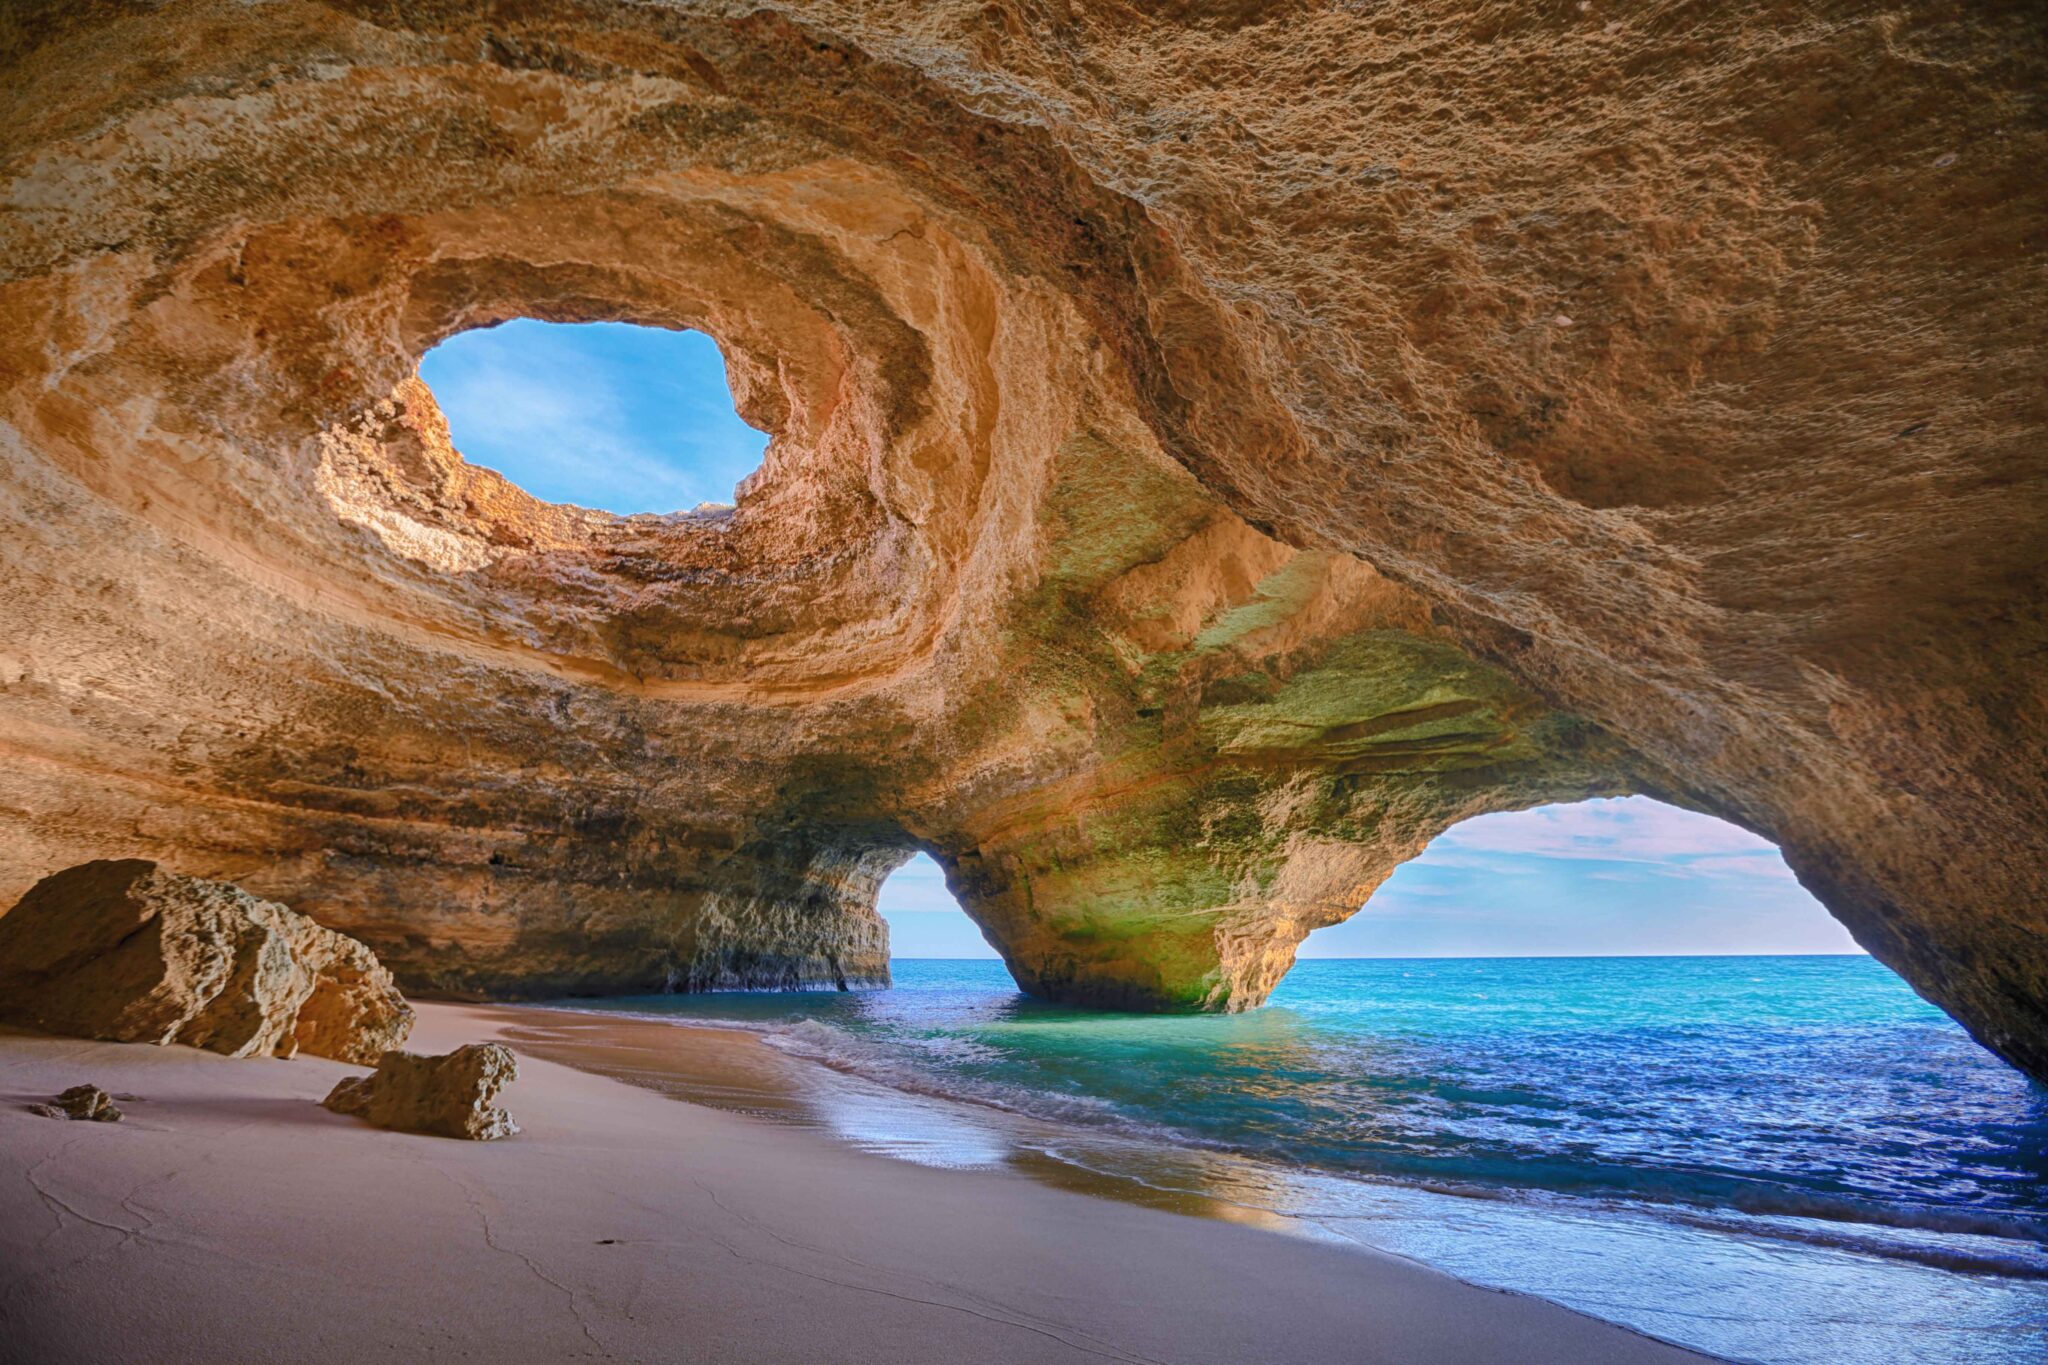 Algarve Tourism relaunches online travel training courses